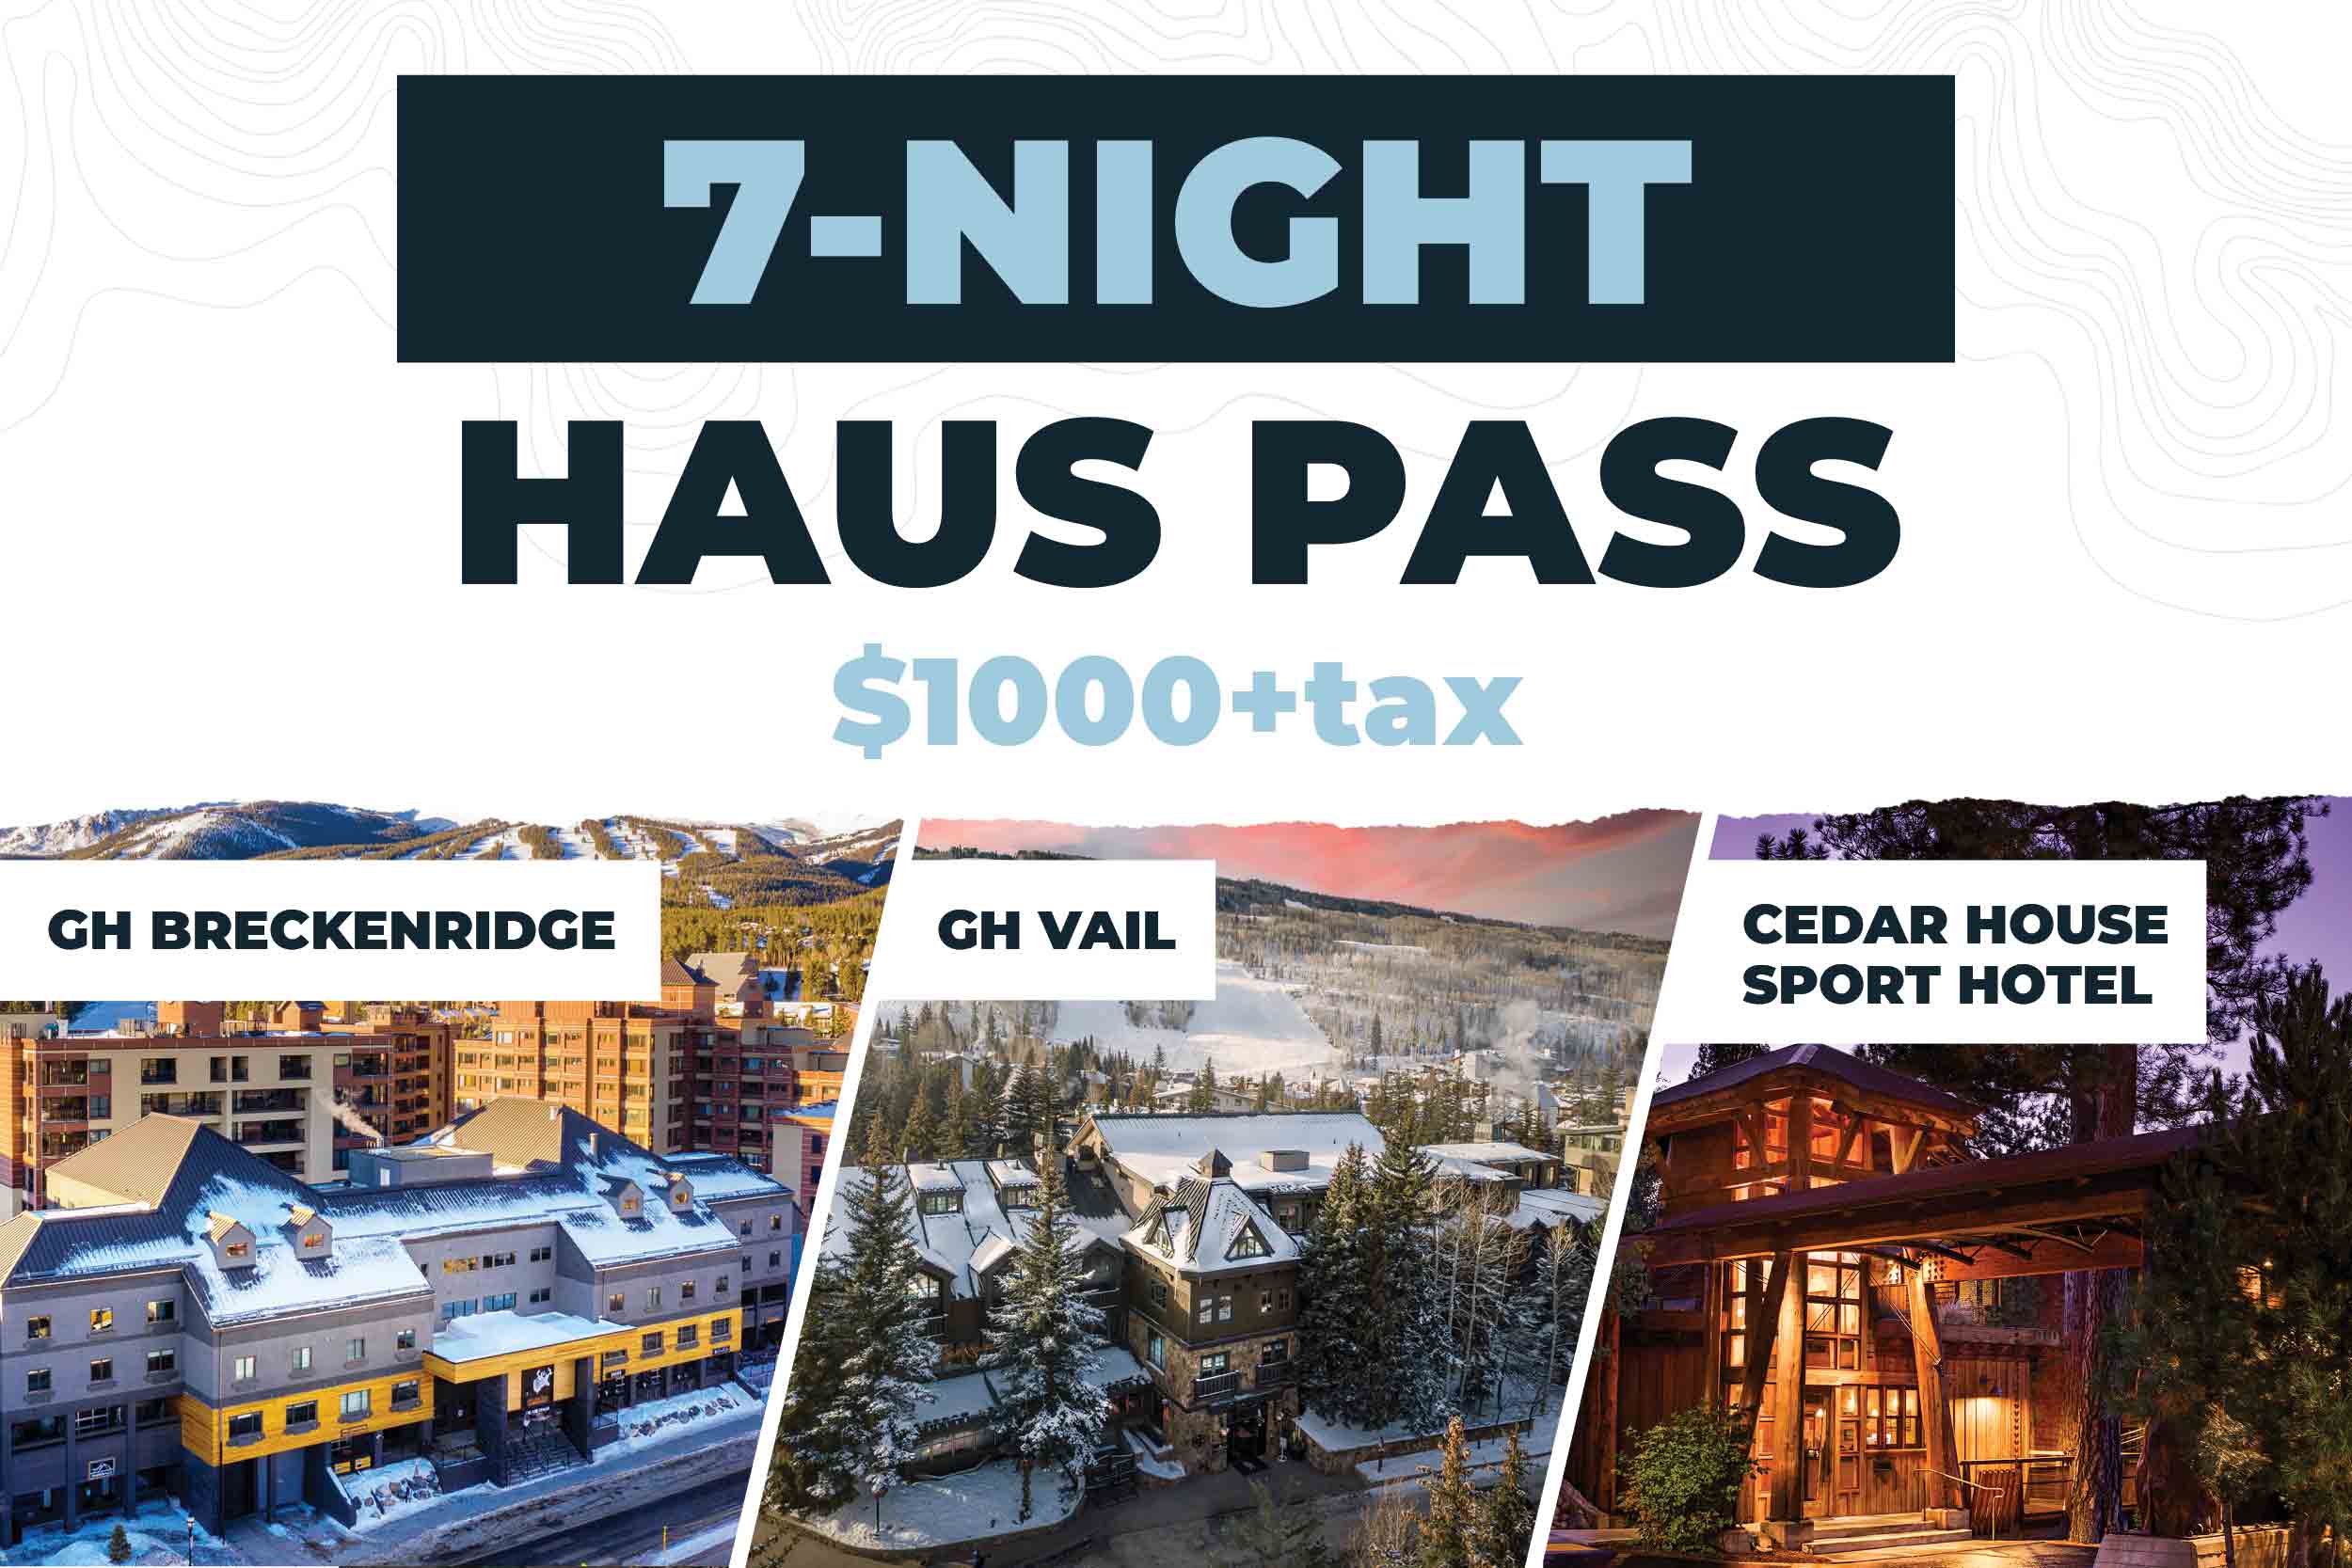 7 Night Haus Pass Offer